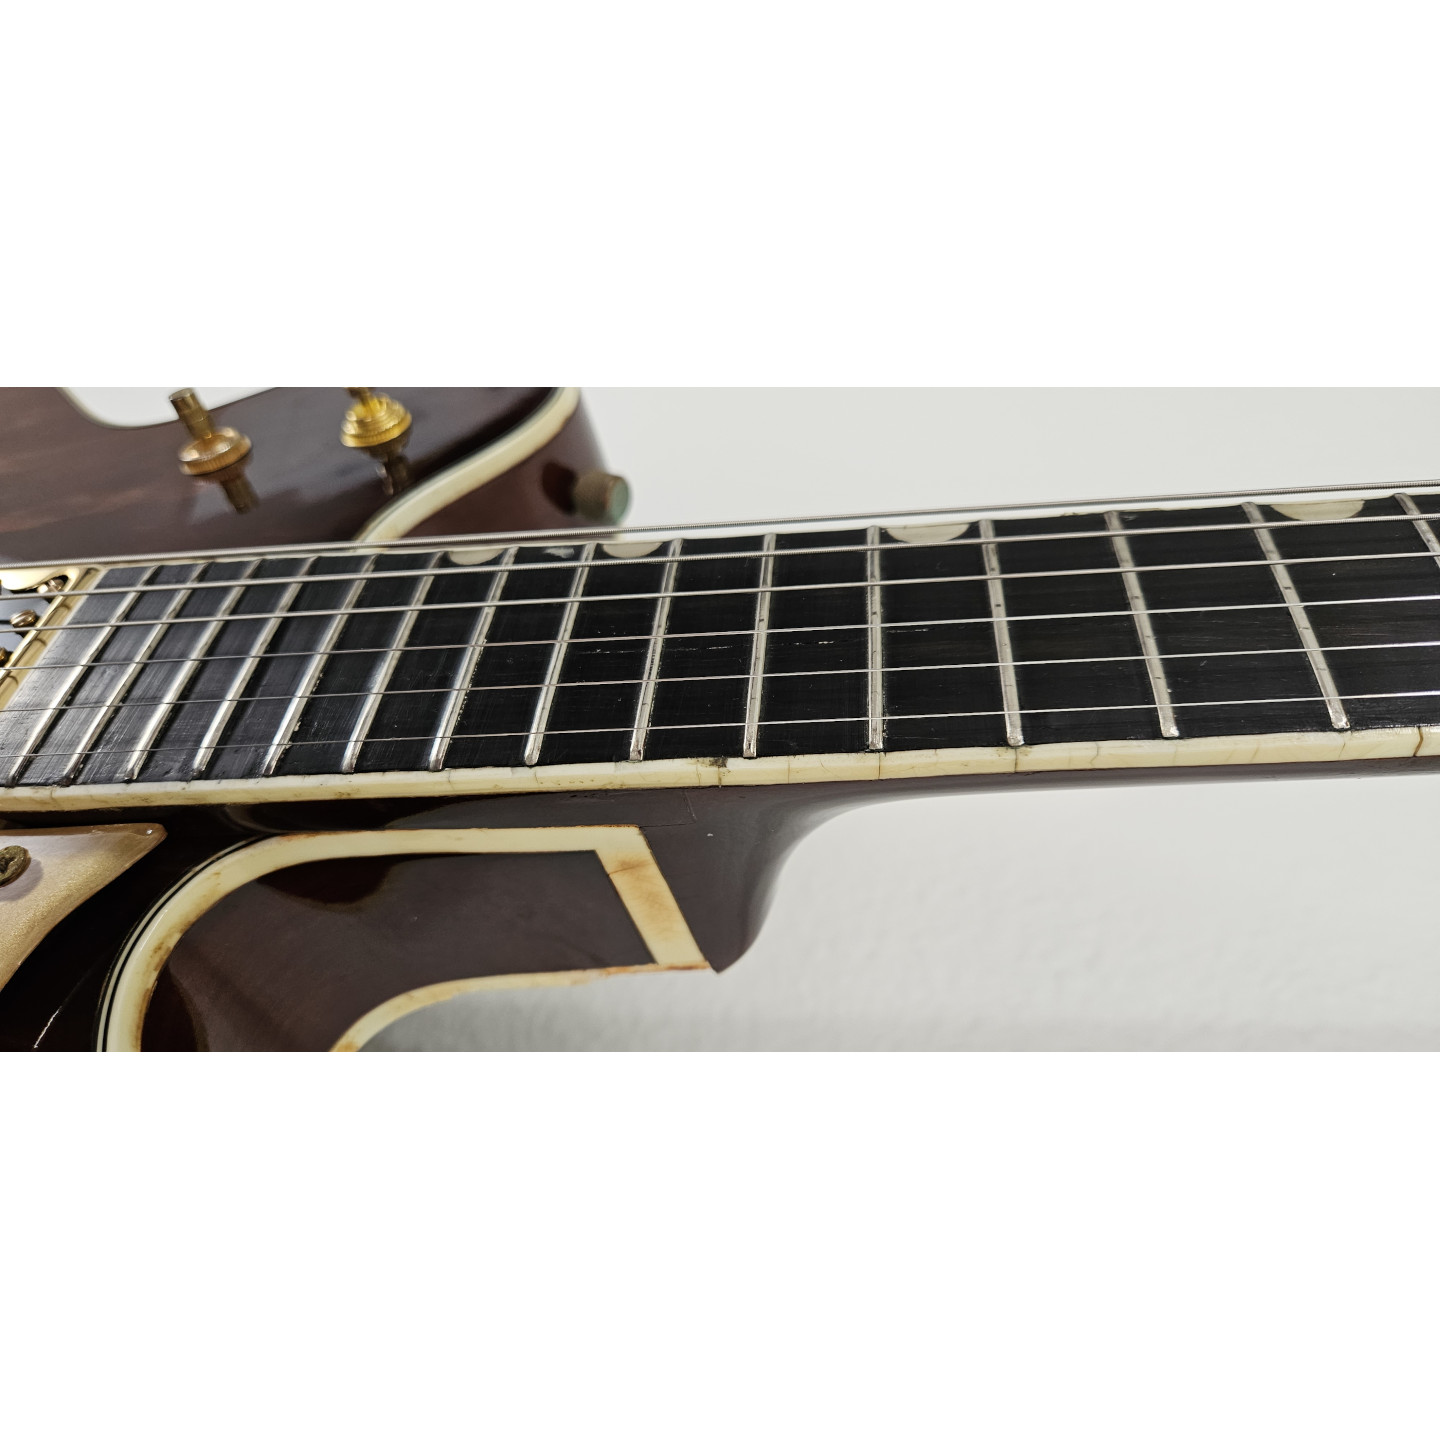 1967 Gretsch 6122 Chet Atkins Country Gentleman Walnut Brown Vintage Electric Guitar